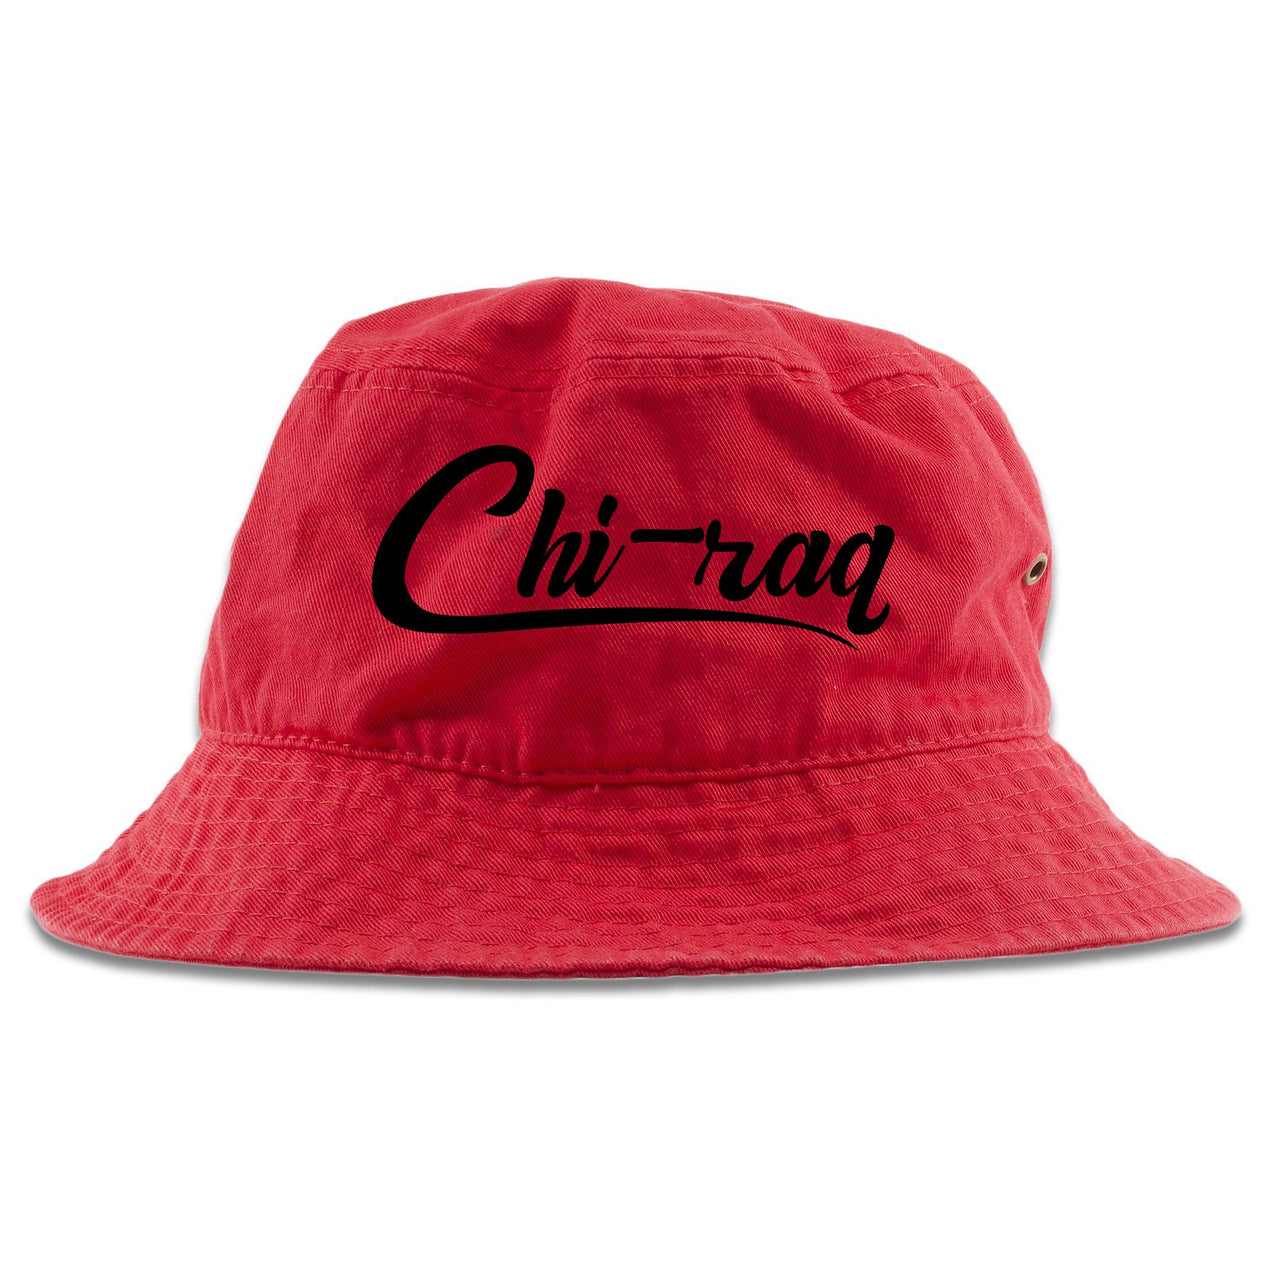 Bred 2019 4s Bucket Hat | Chiraq, Red